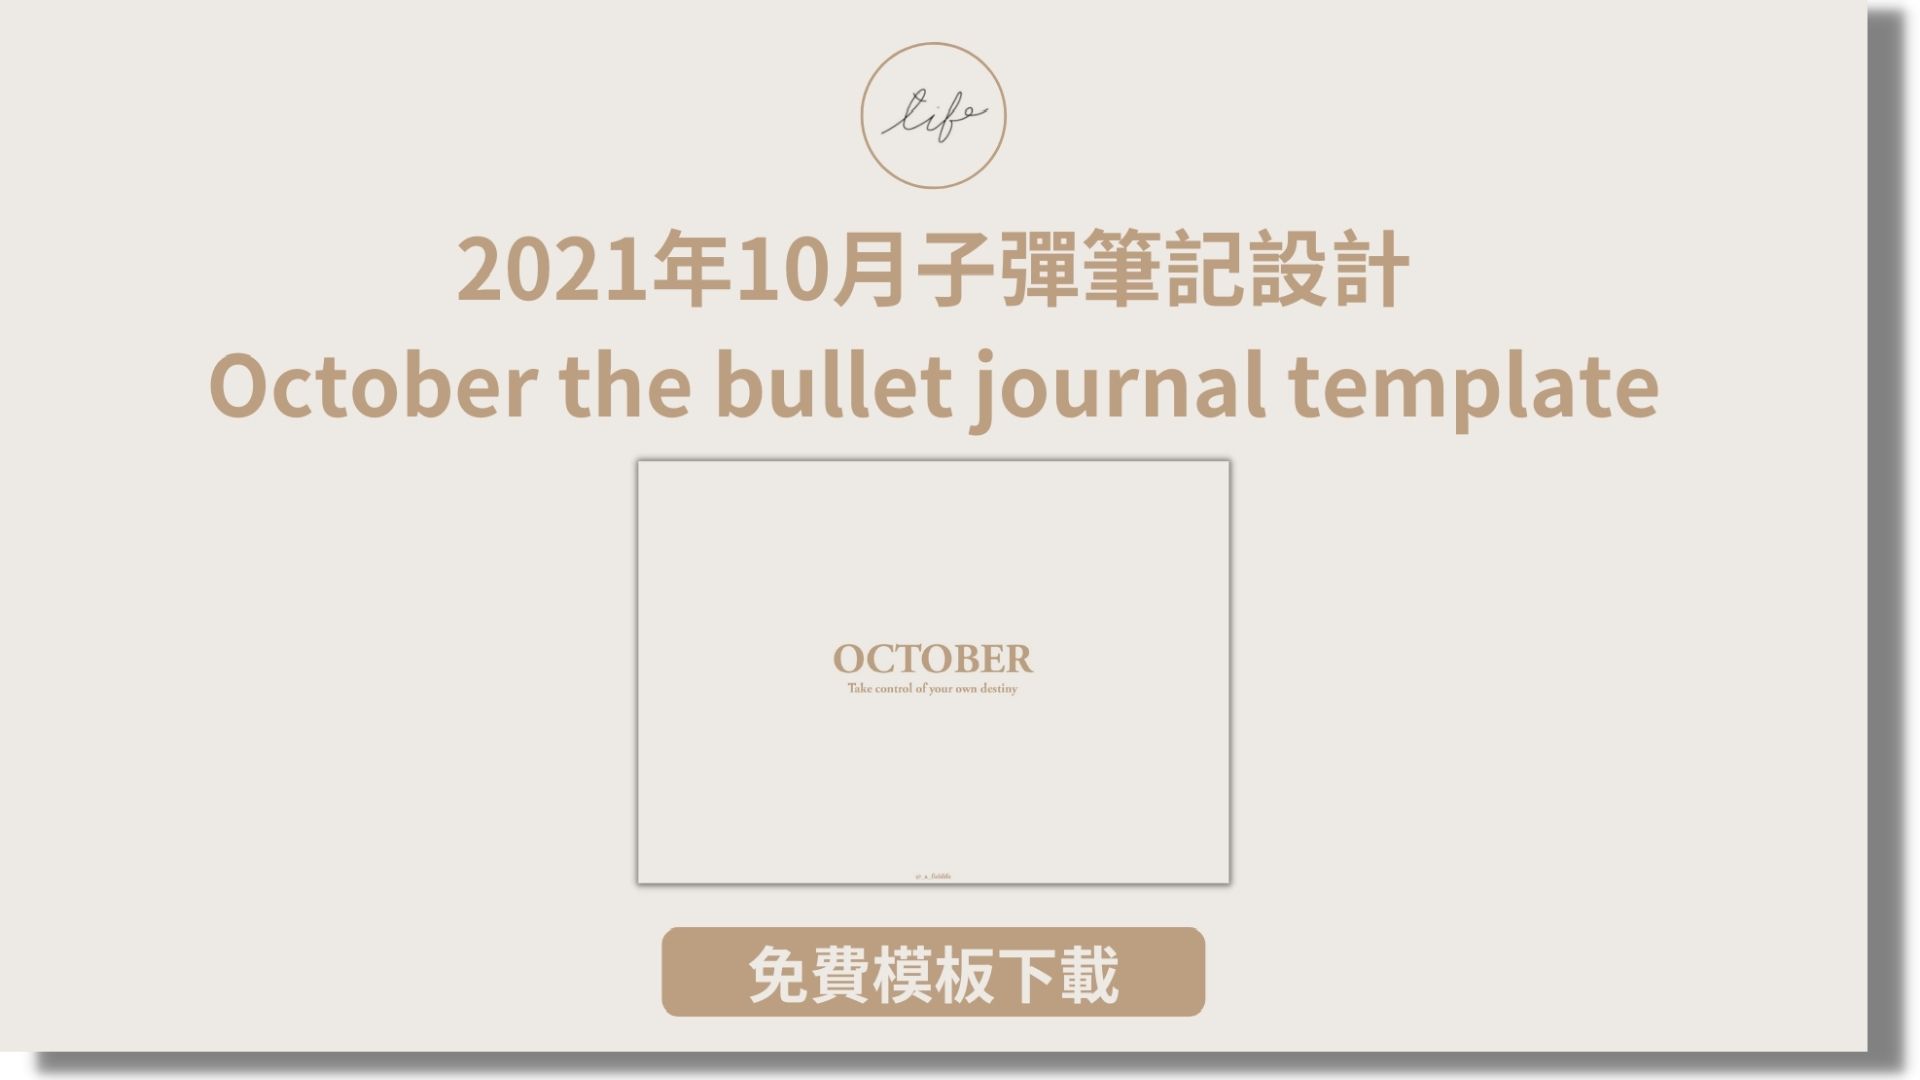 You are currently viewing 【免費下載】2021年10月子彈筆記設計，一隻魚品牌色設計｜October bullet journal template